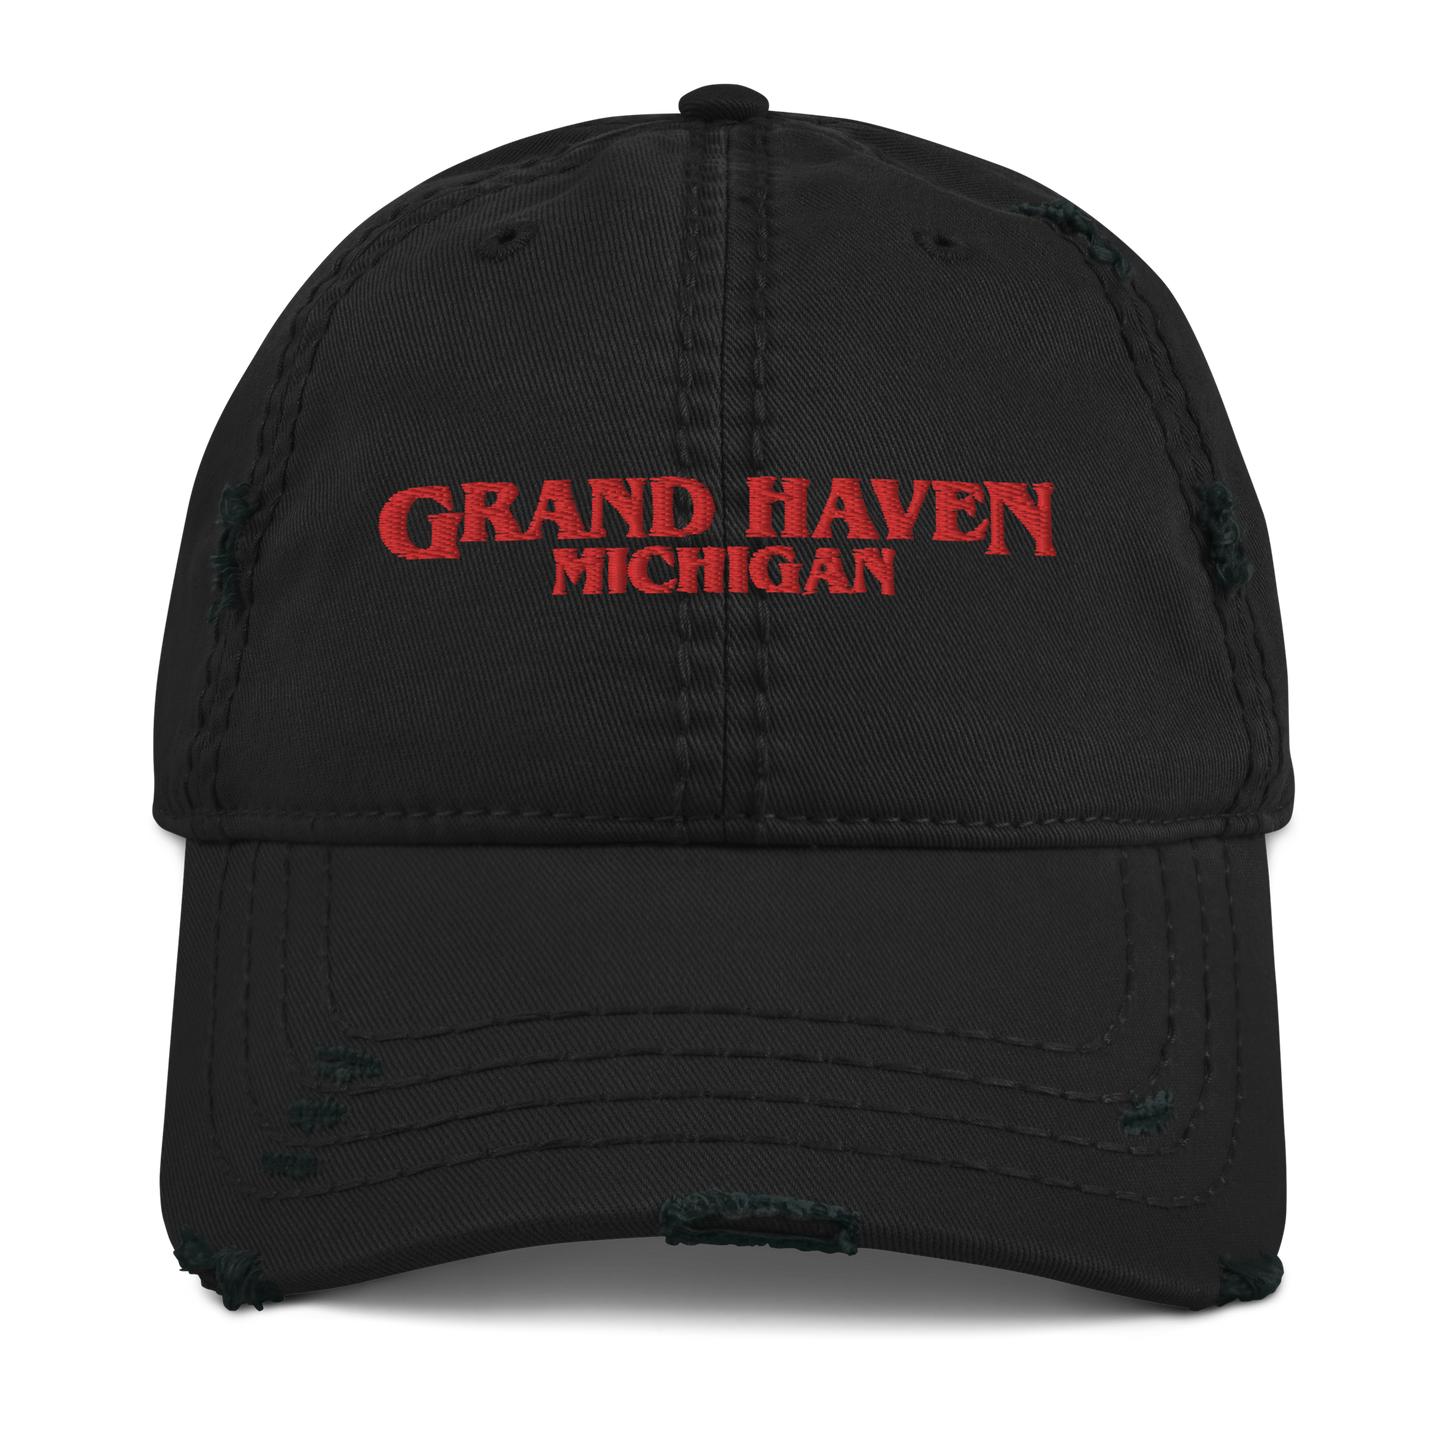 'Grand Haven Michigan' Distressed Dad Hat (1980s Drama Parody)